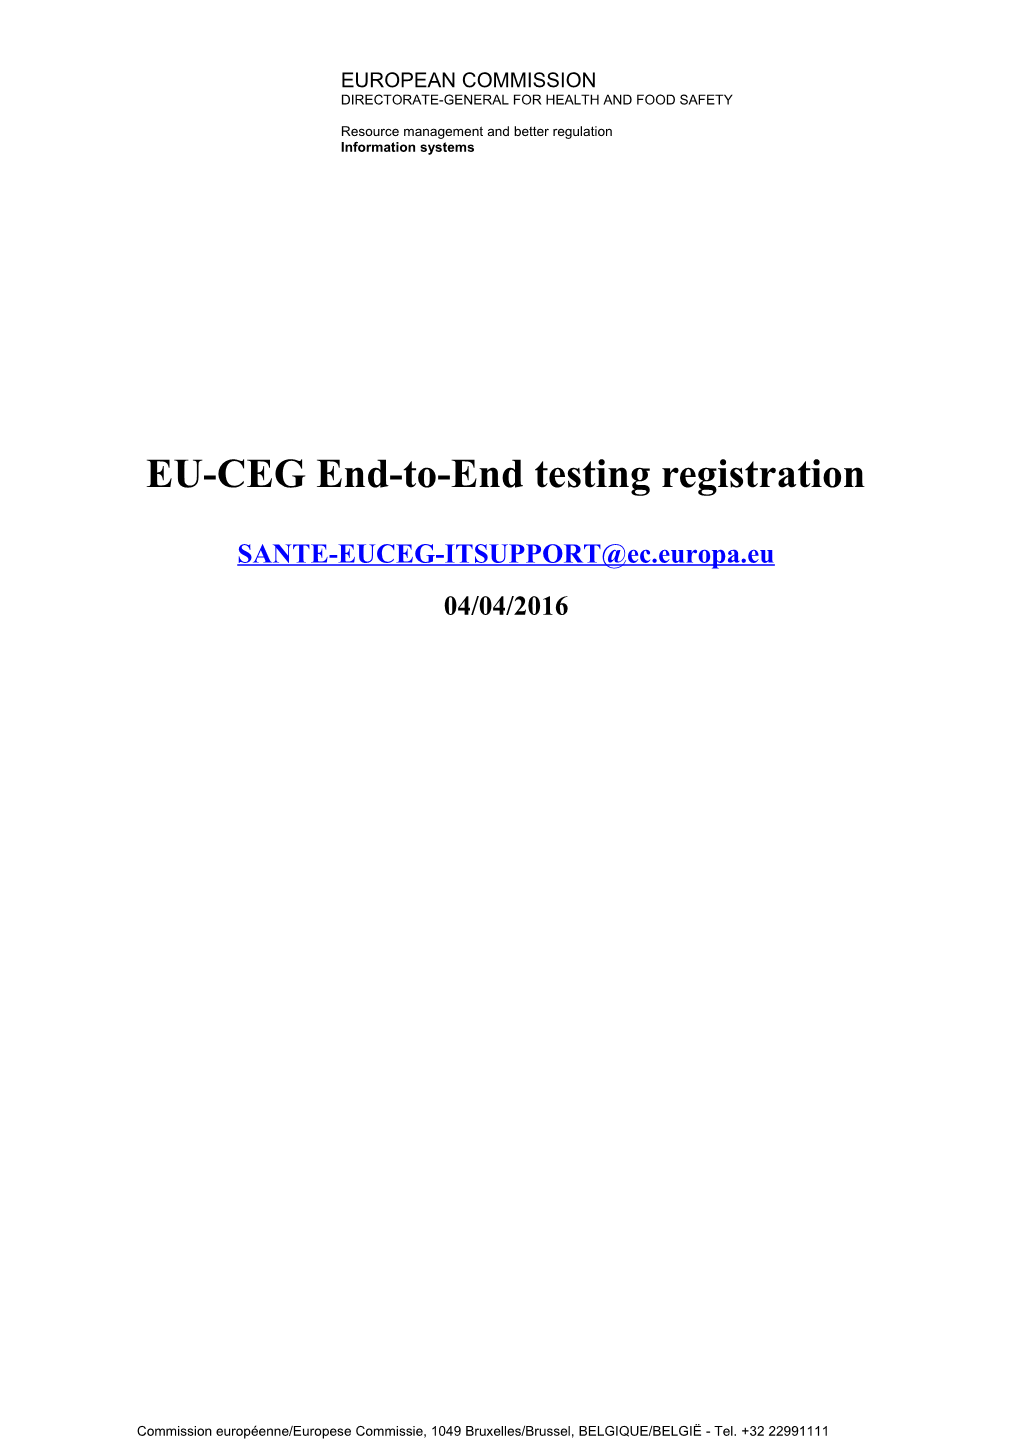 EU-CEG End-To-End Testing Registration